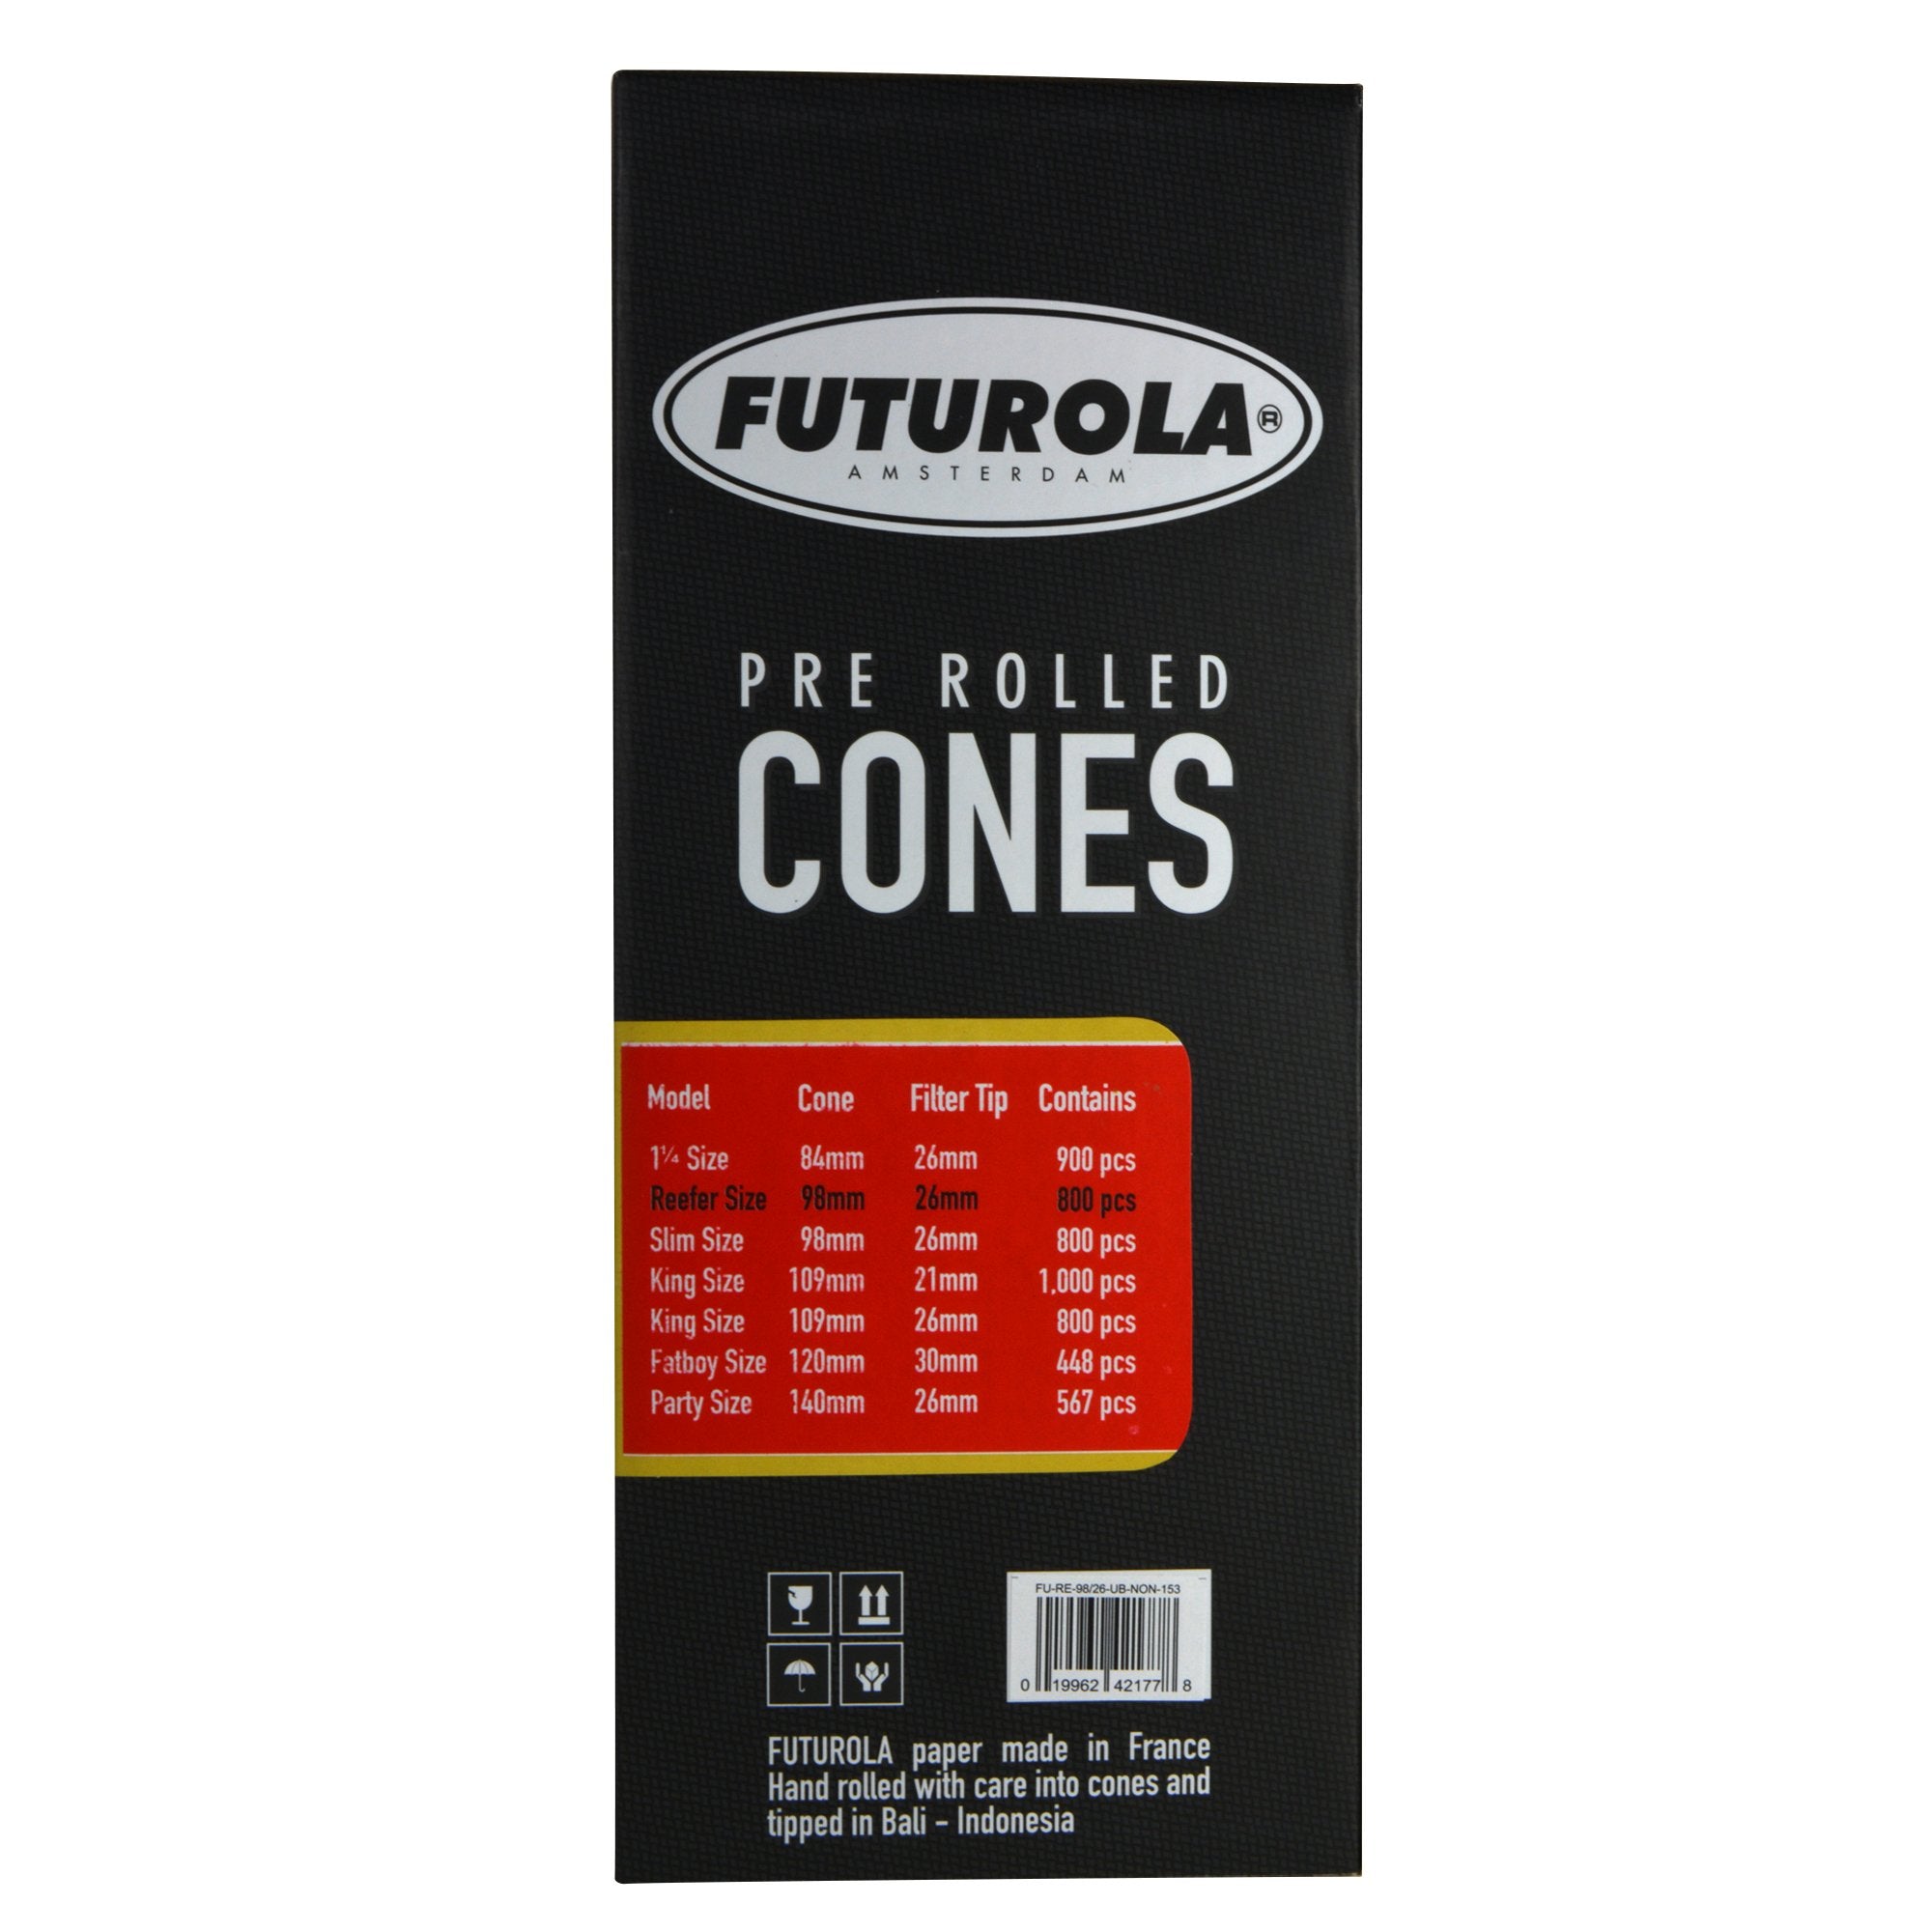 FUTUROLA | Reefer Size Pre-Rolled Cones | 98mm - Dutch Brown Paper - 800 Count - 4